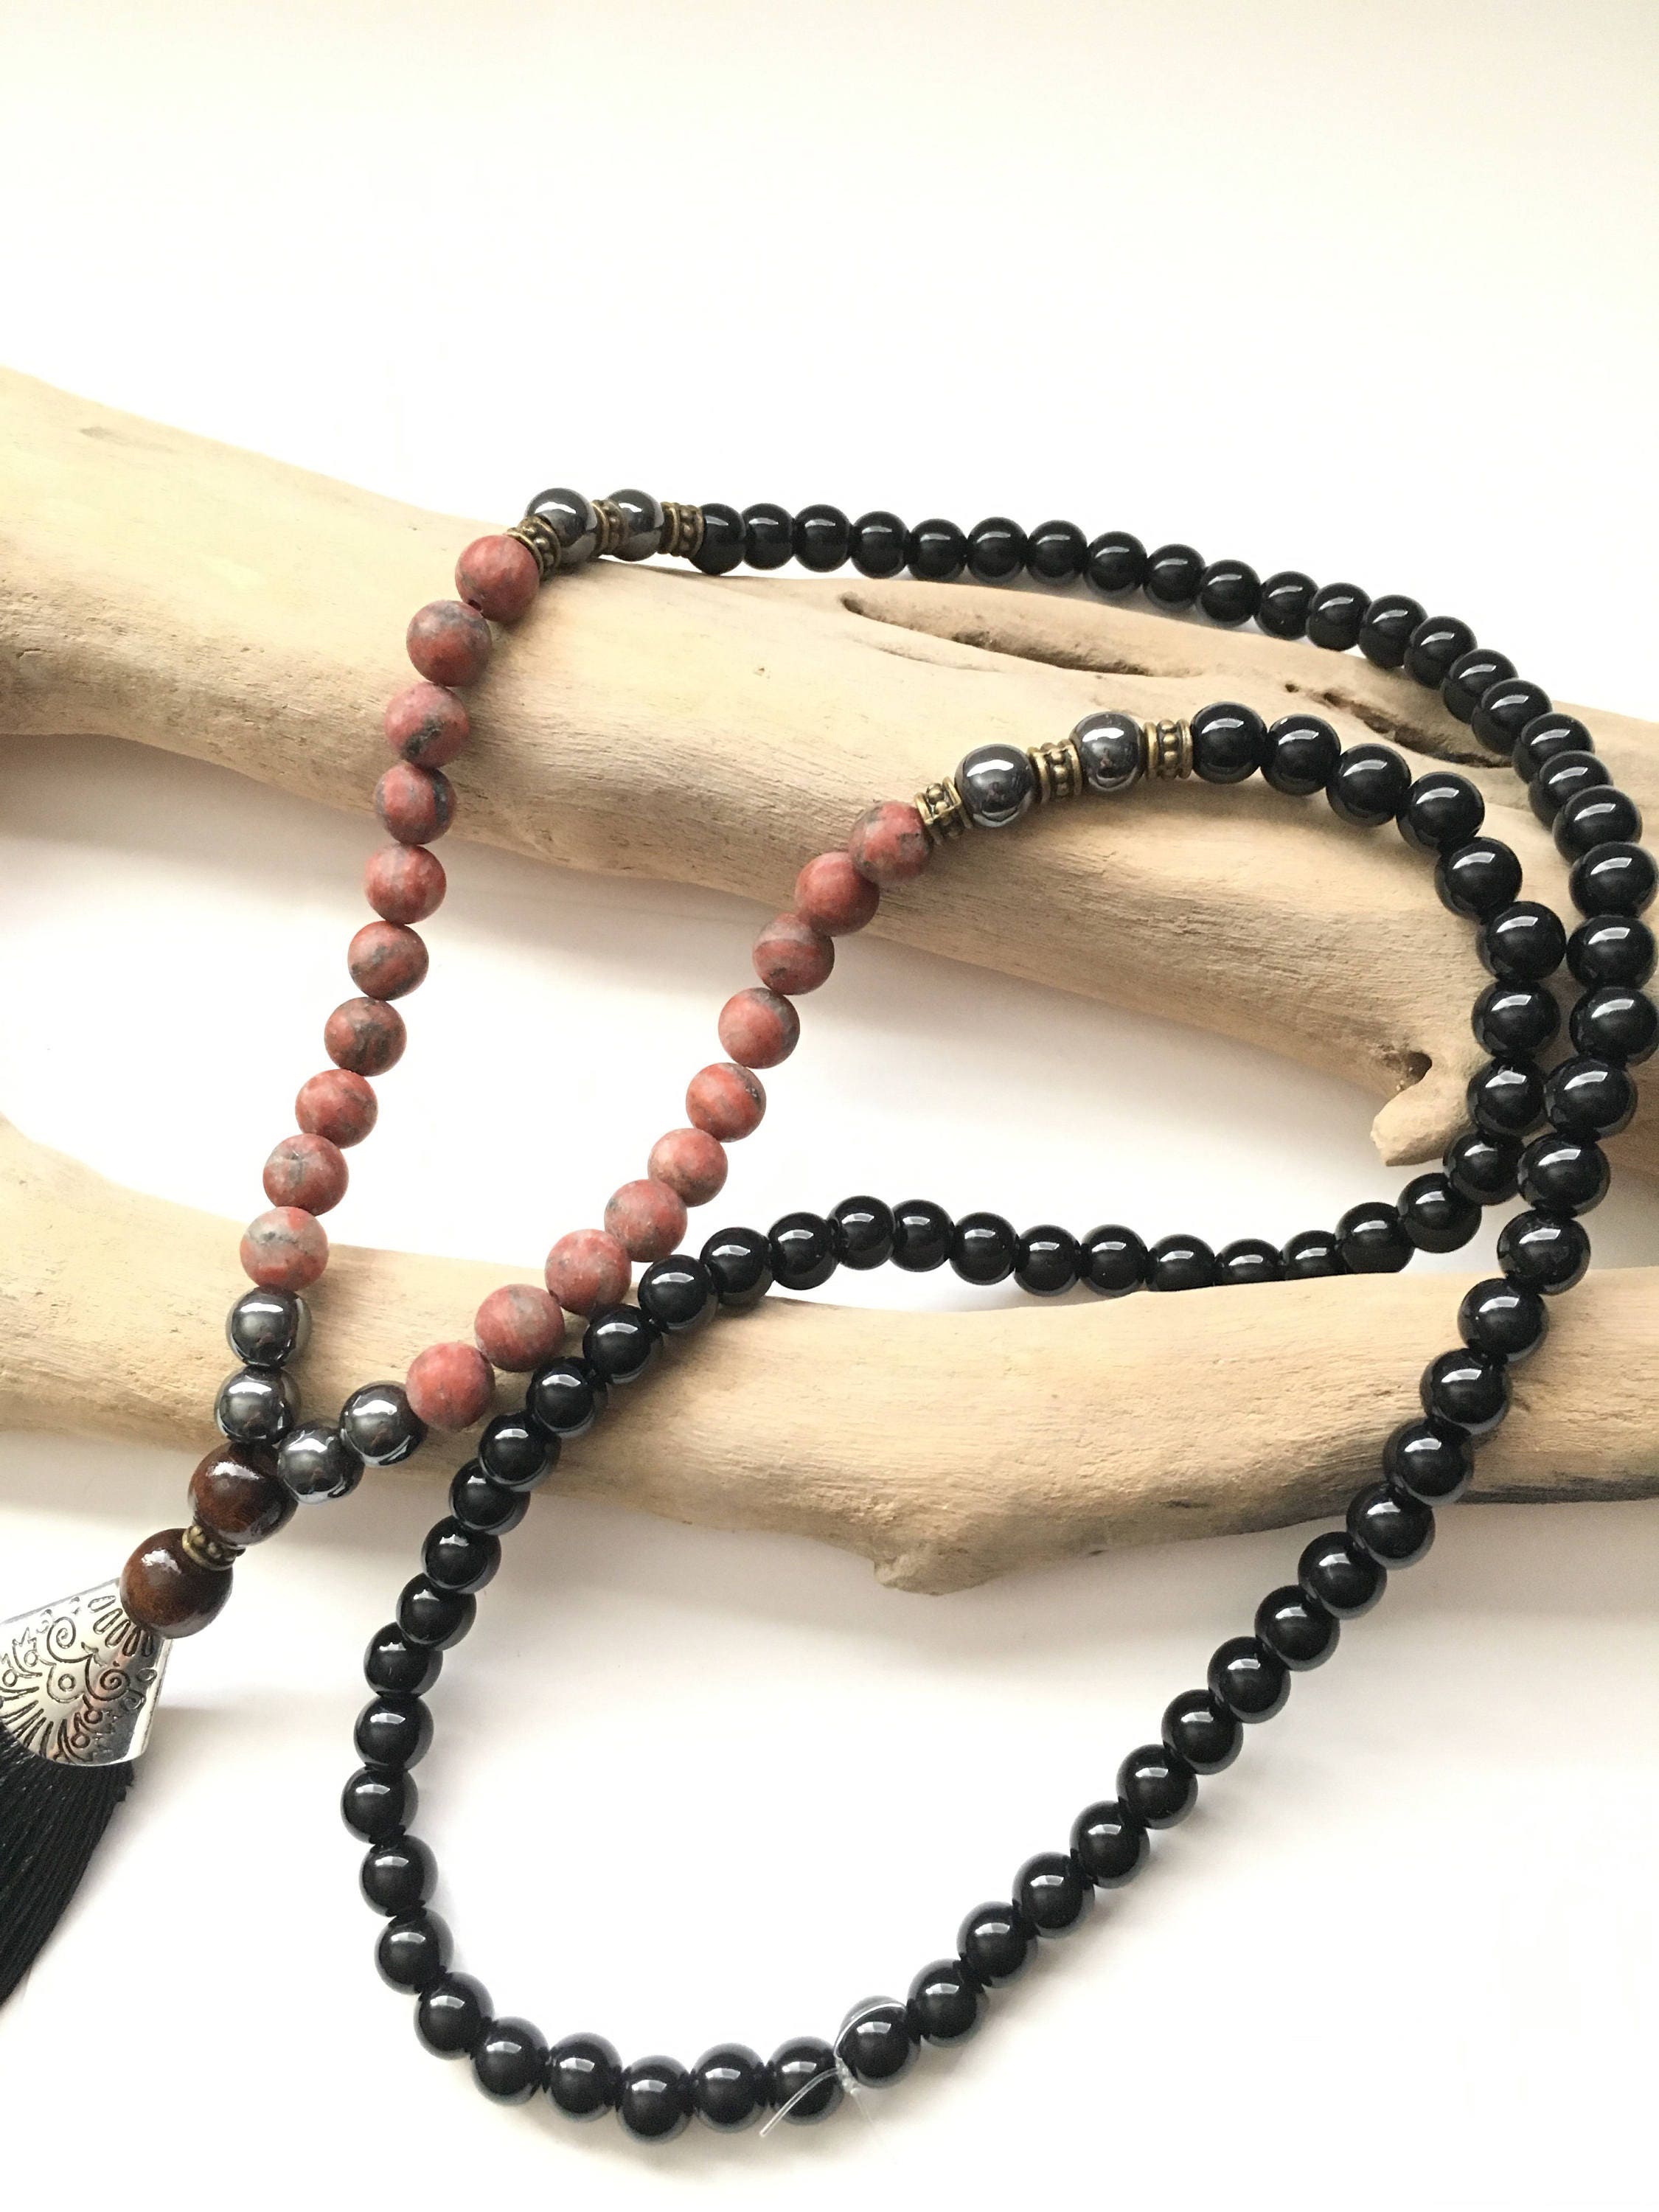 Boho black natural beads with tassle